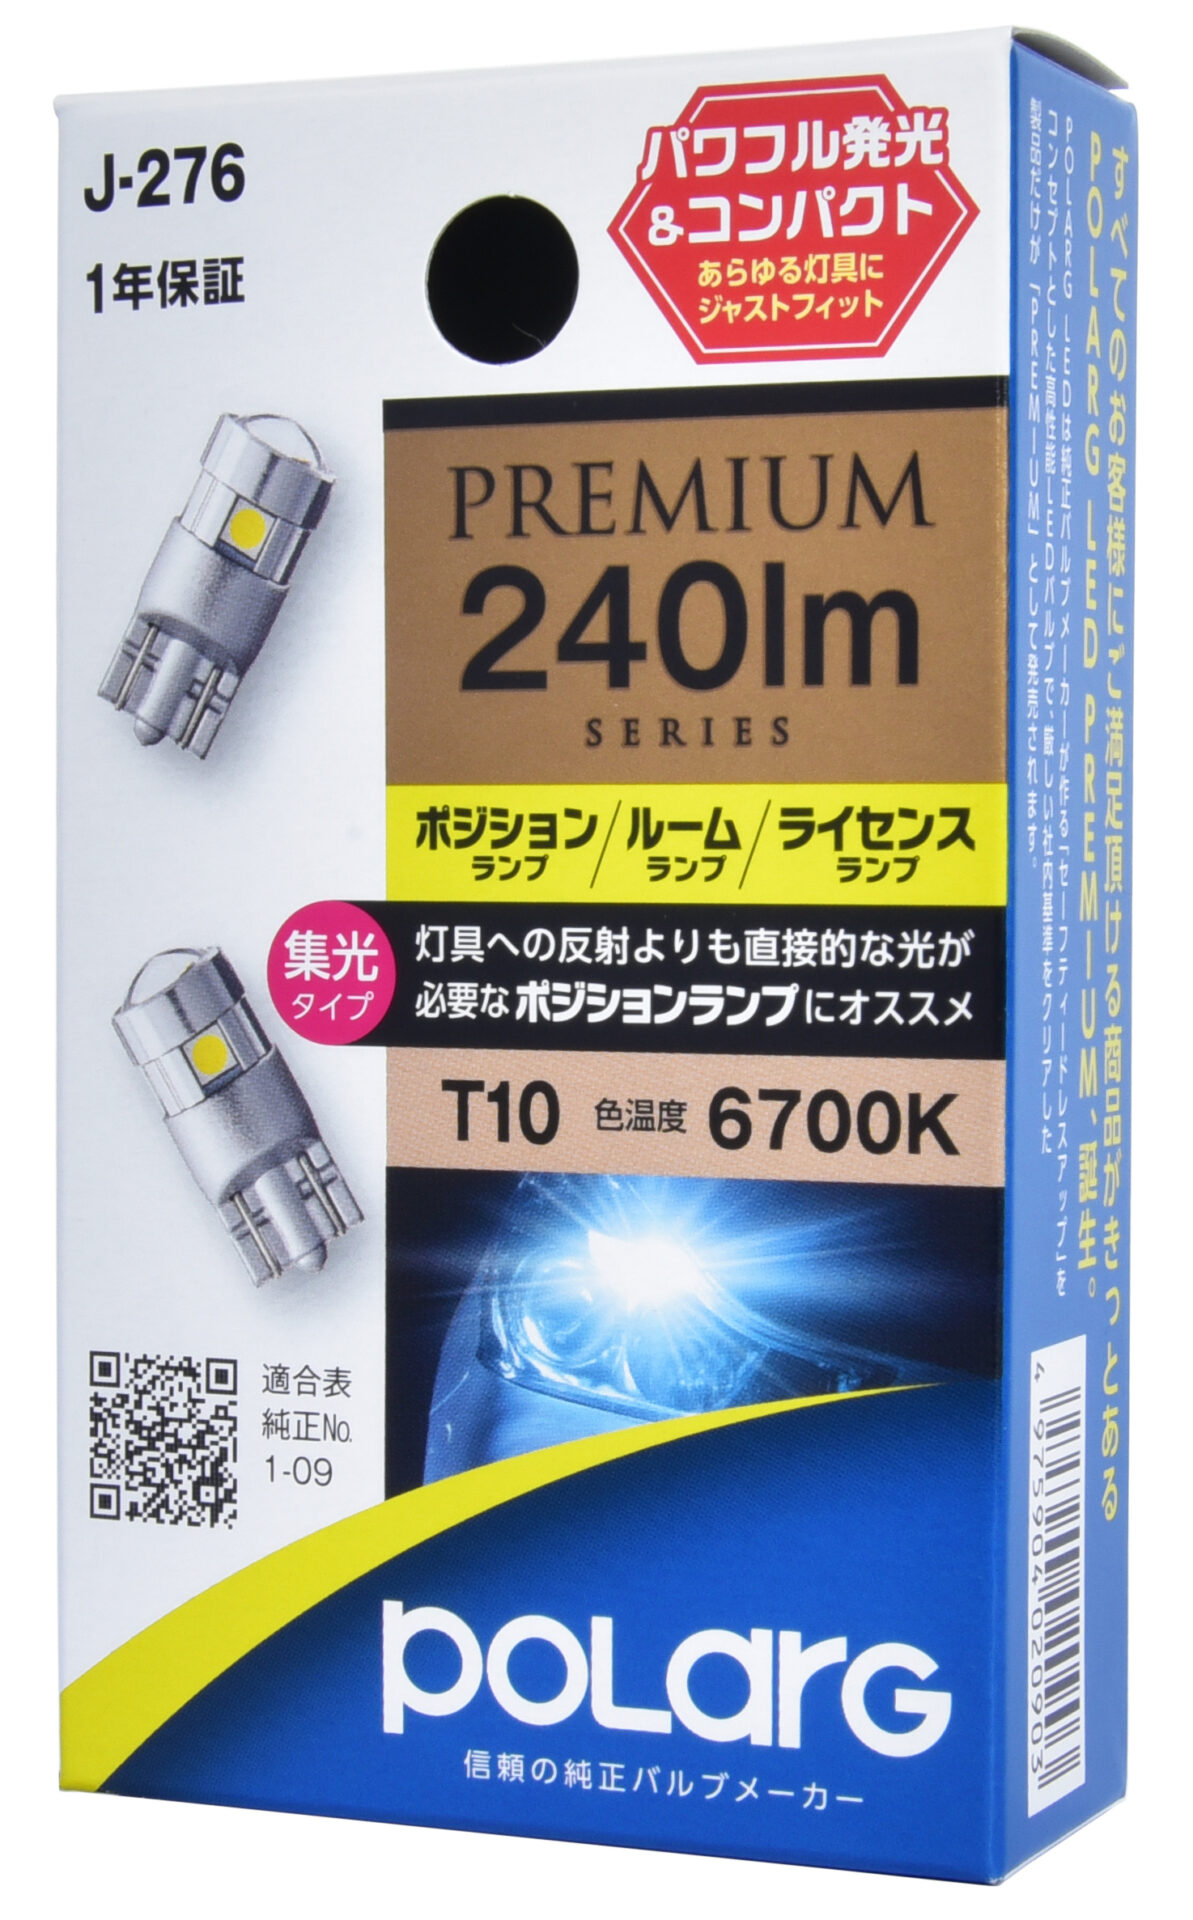 POLARG LED PREMIUMポジション・ライセンス・ルーム | 日星工業株式会社